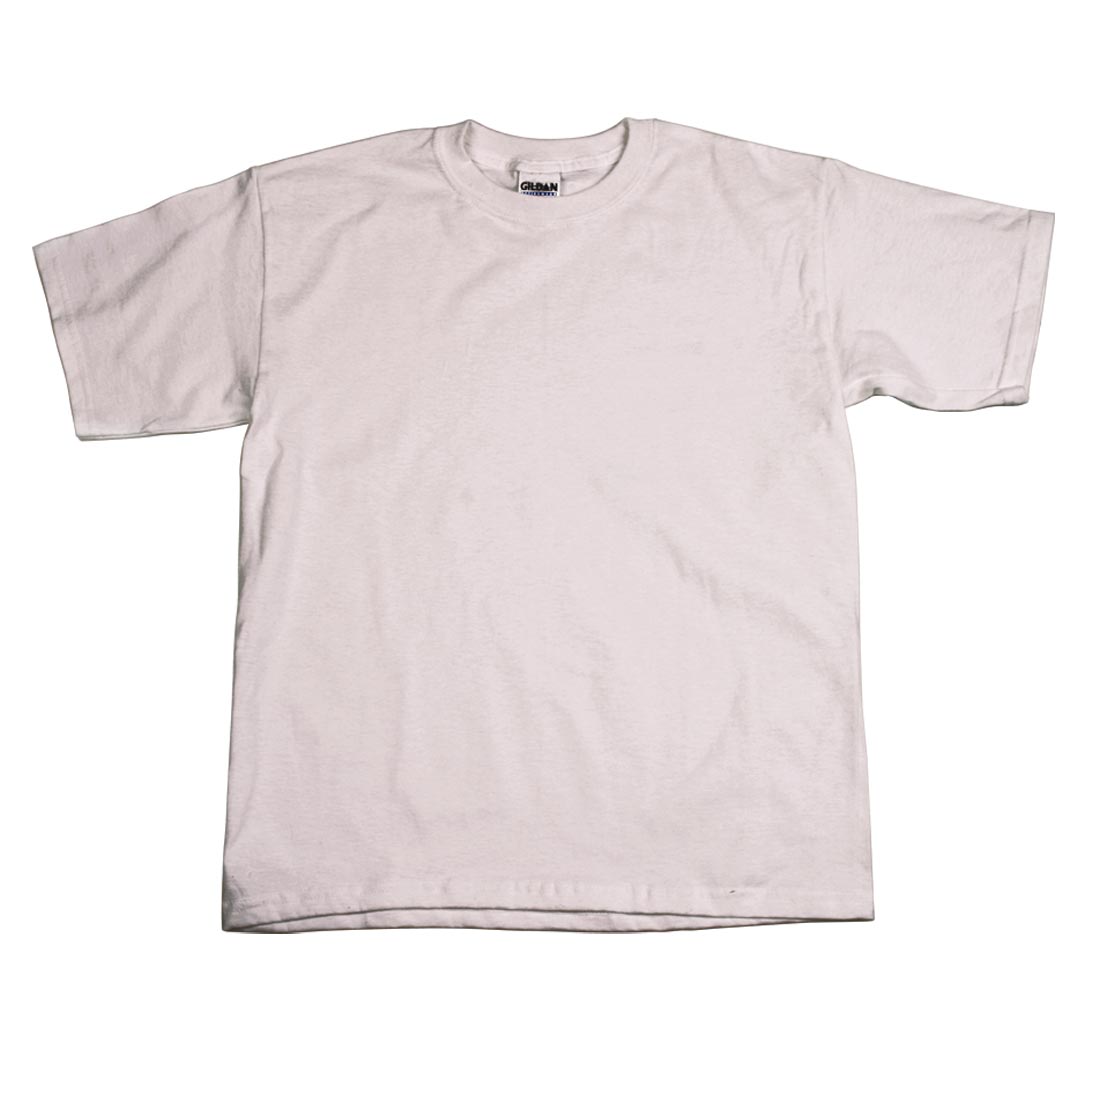 Extra Large Plain White T-Shirt